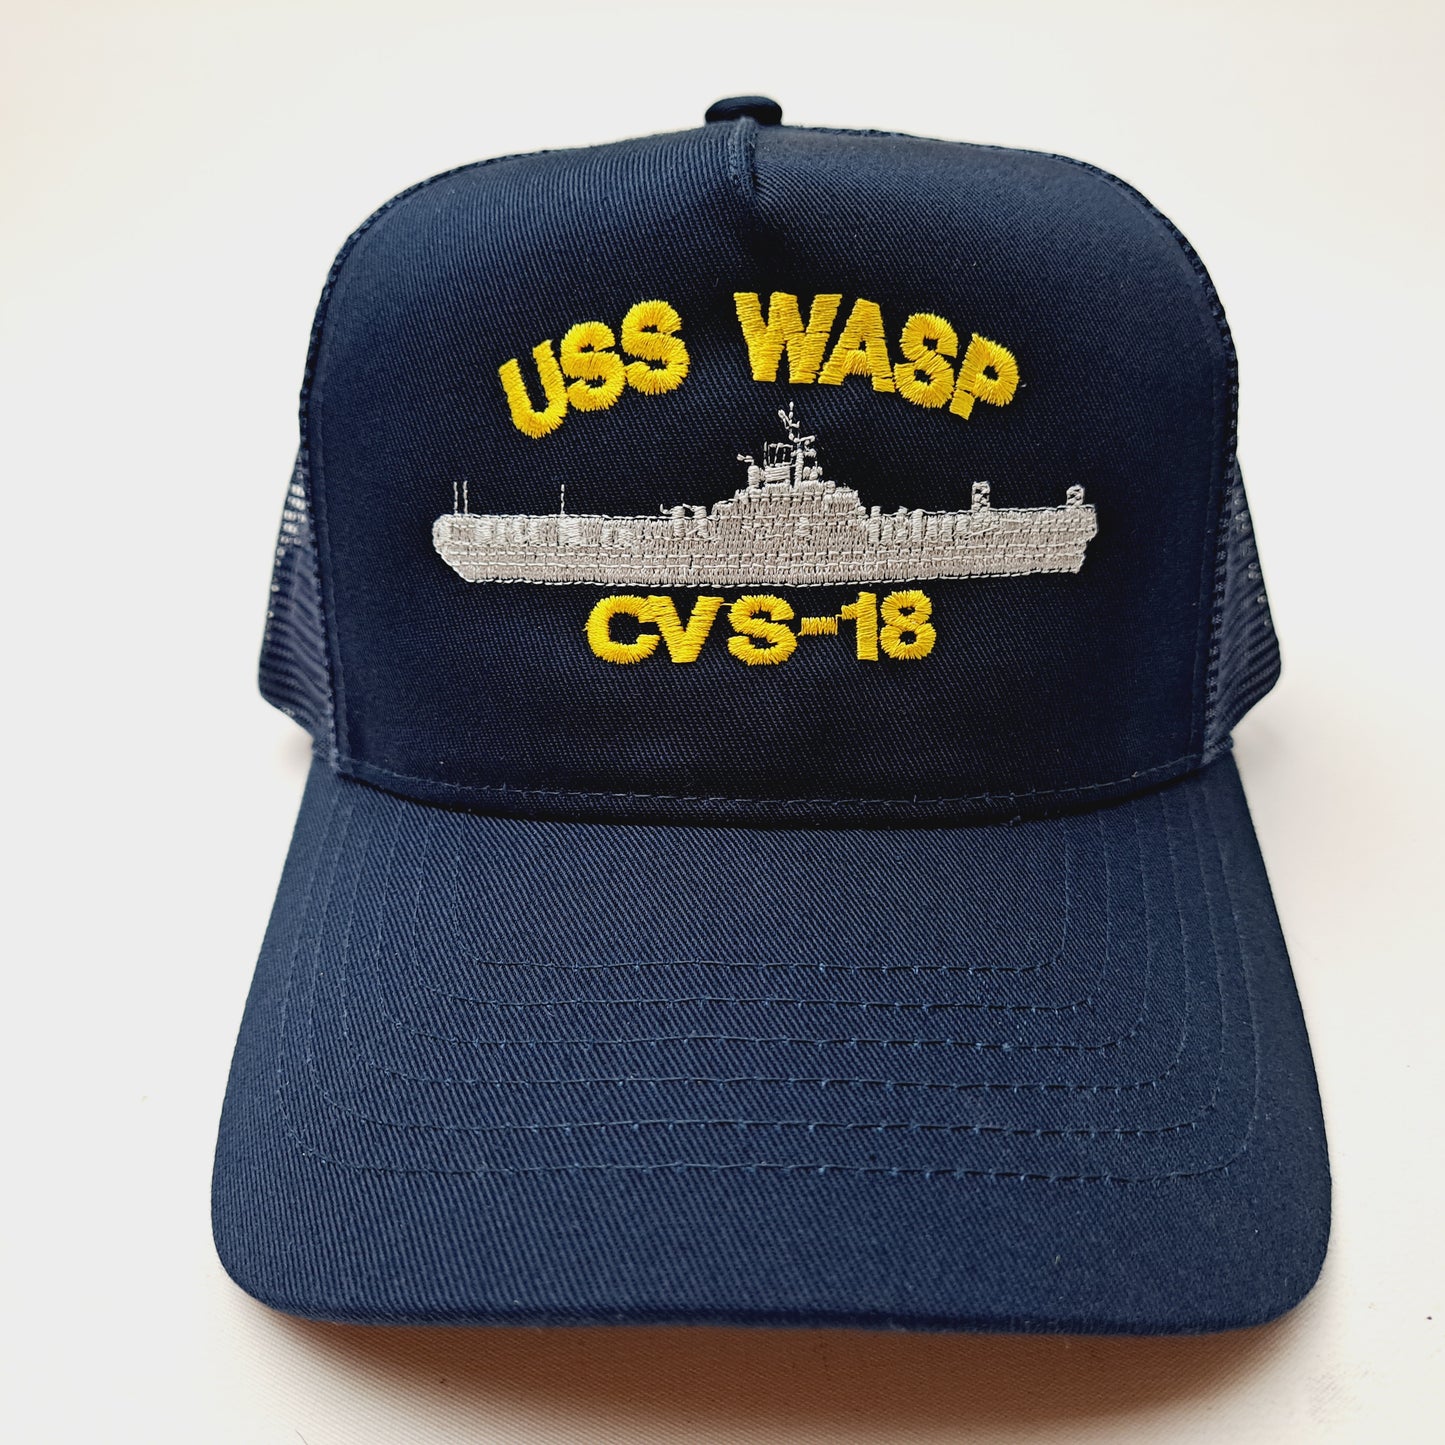 U.S. Navy USS Wasp CVS-18 Men's Mesh Snapback Cap Hat Navy Blue